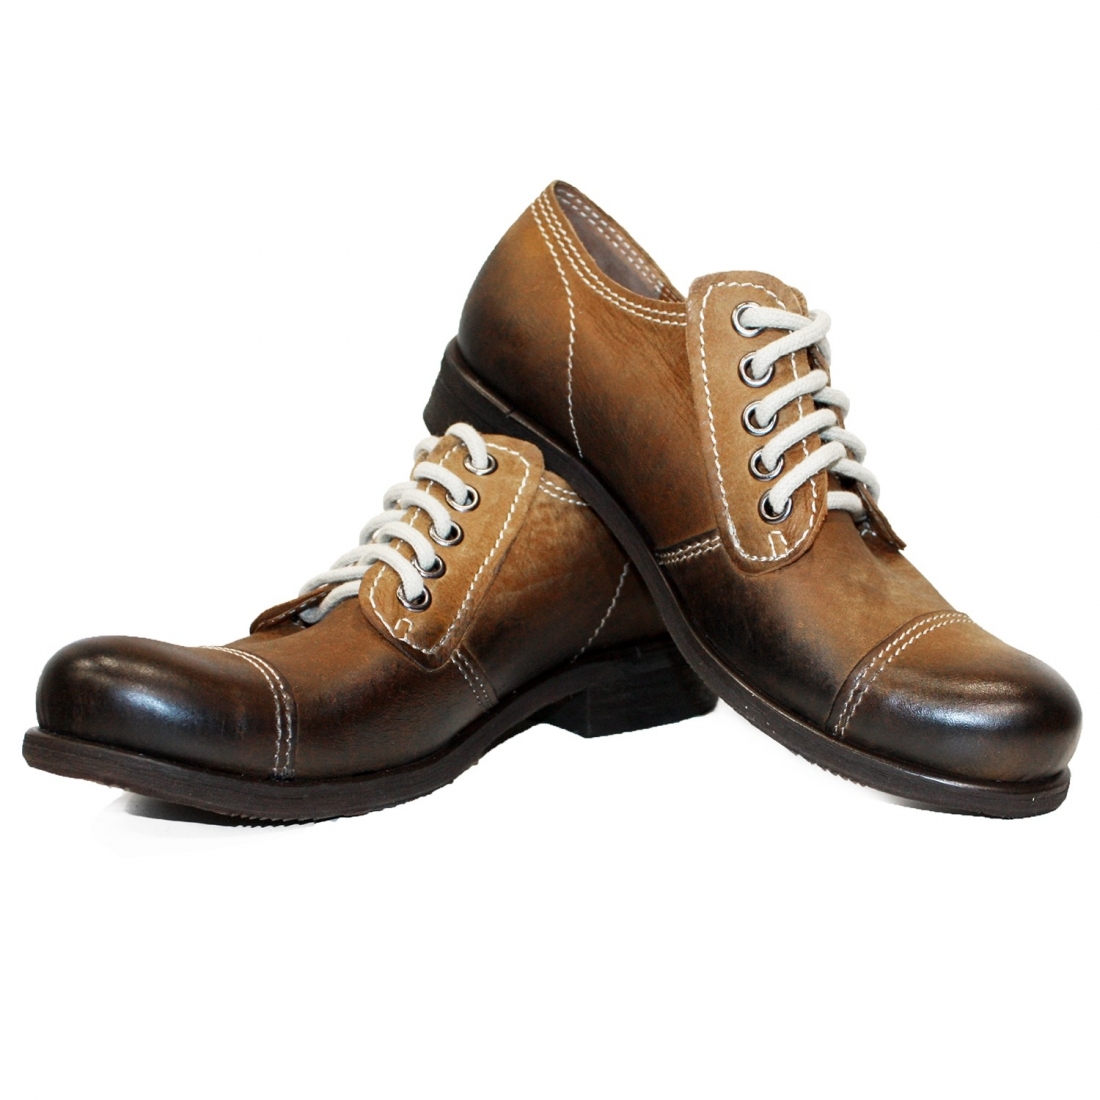 Modello Jetrello - Inne Botki - Handmade Colorful Italian Leather Shoes